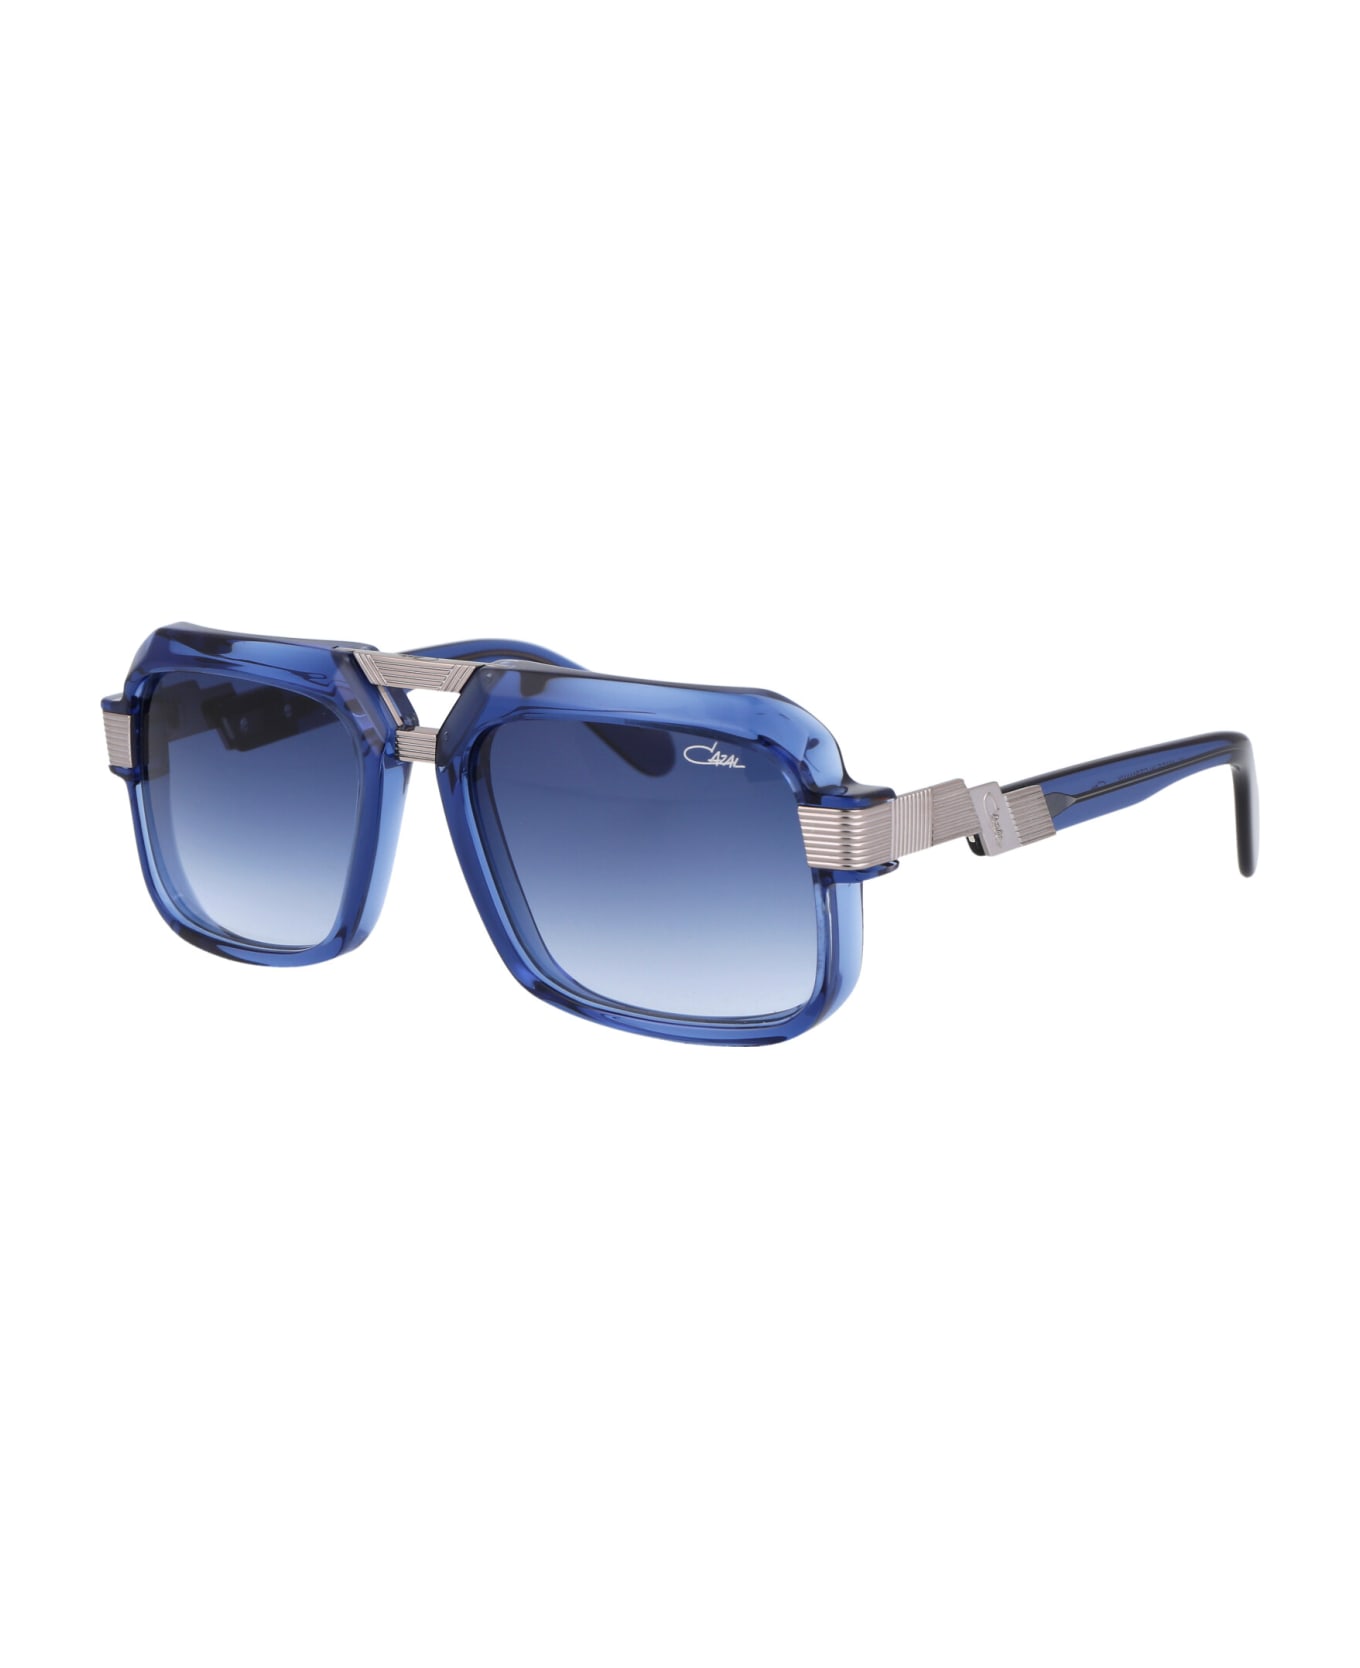 Cazal Mod. 669 Sunglasses - 002 BLUE サングラス